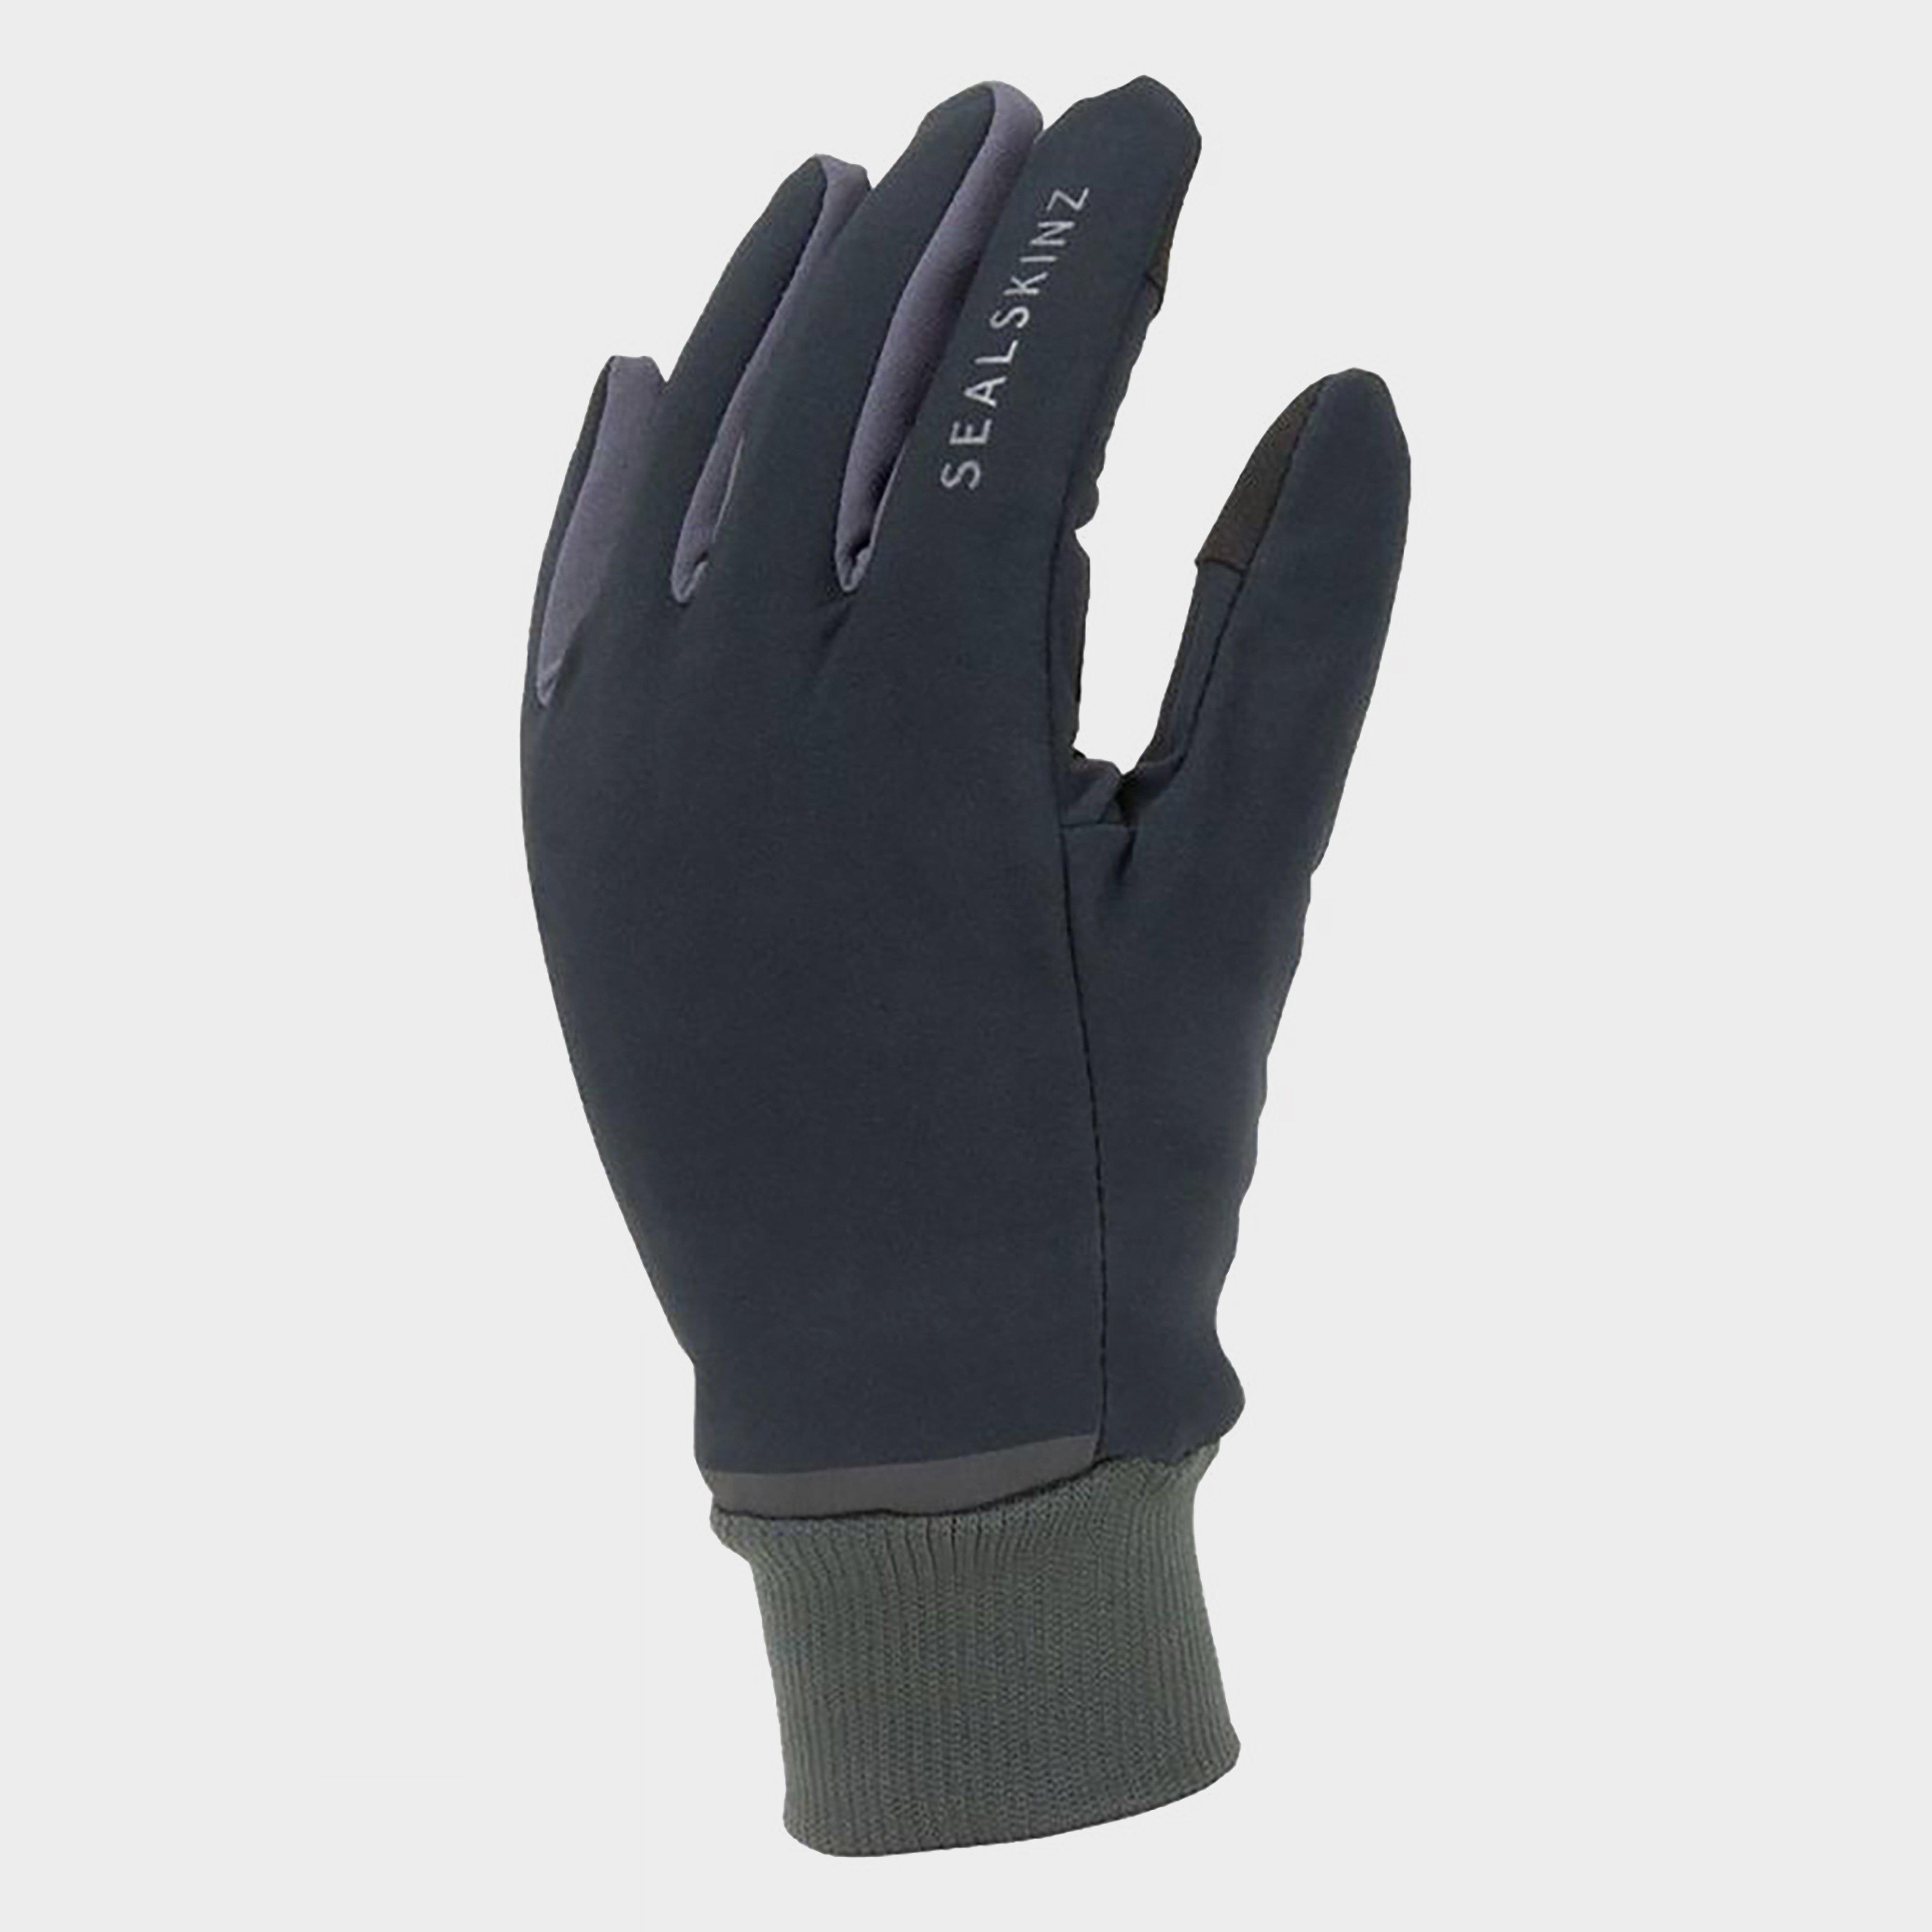 Sealskinz Waterproof All Weather Lightweight Glove With Fusion Control - Black/glove  Black/glove